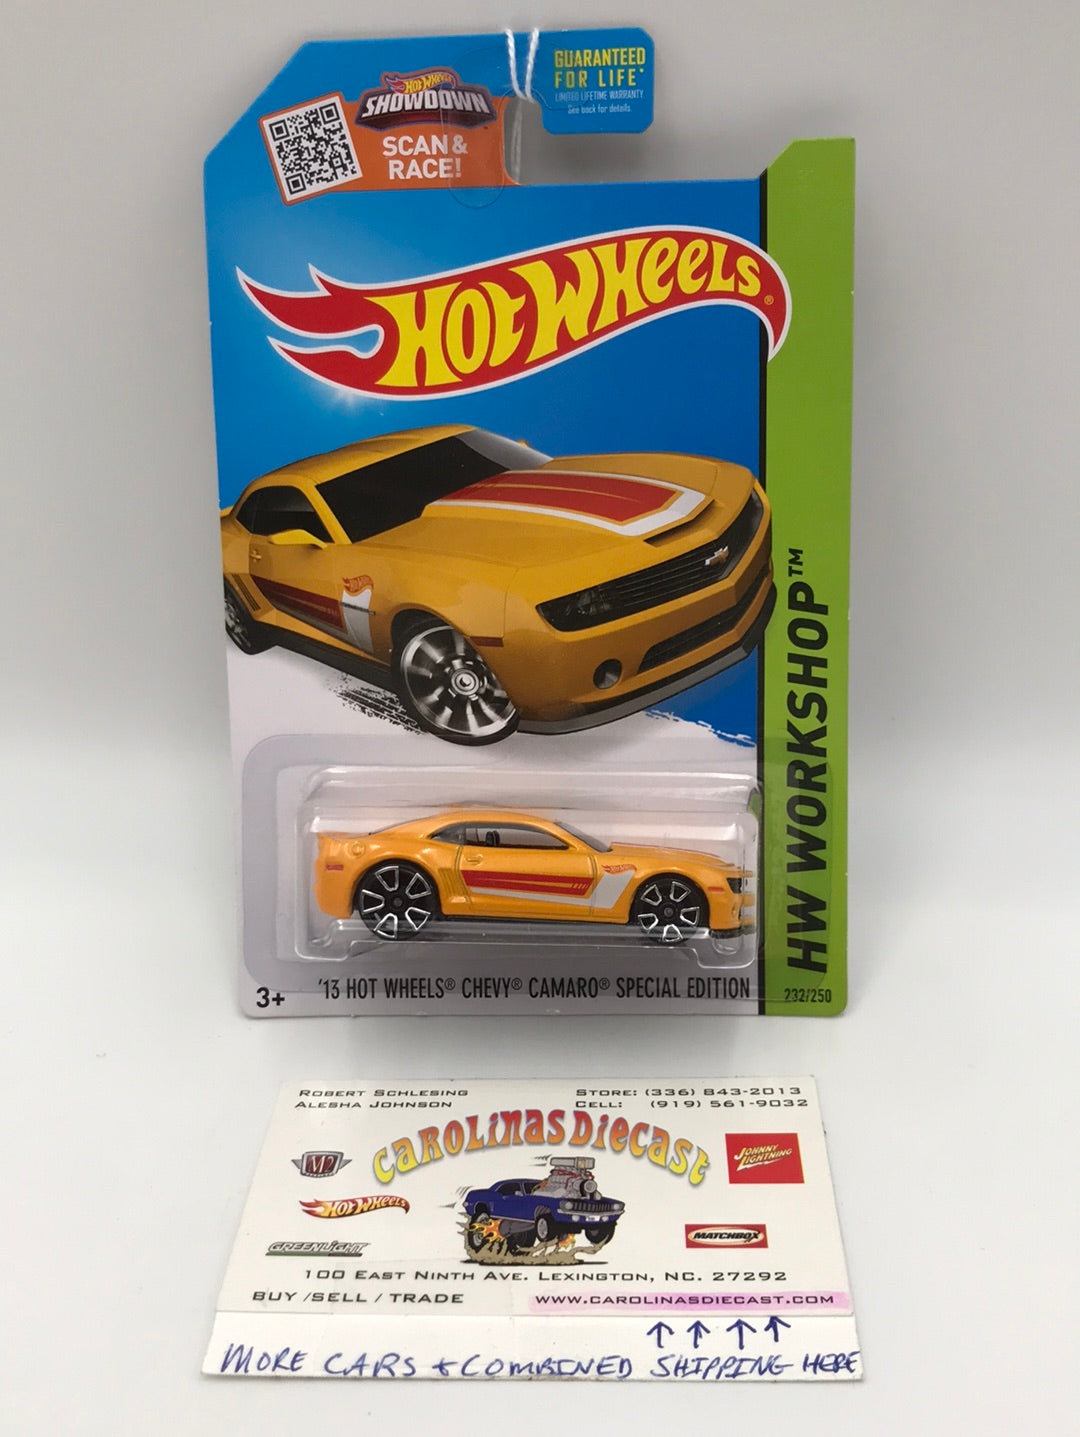 2015 Hot Wheels #232 13 Hot wheels chevy camaro special edition yellow GG4